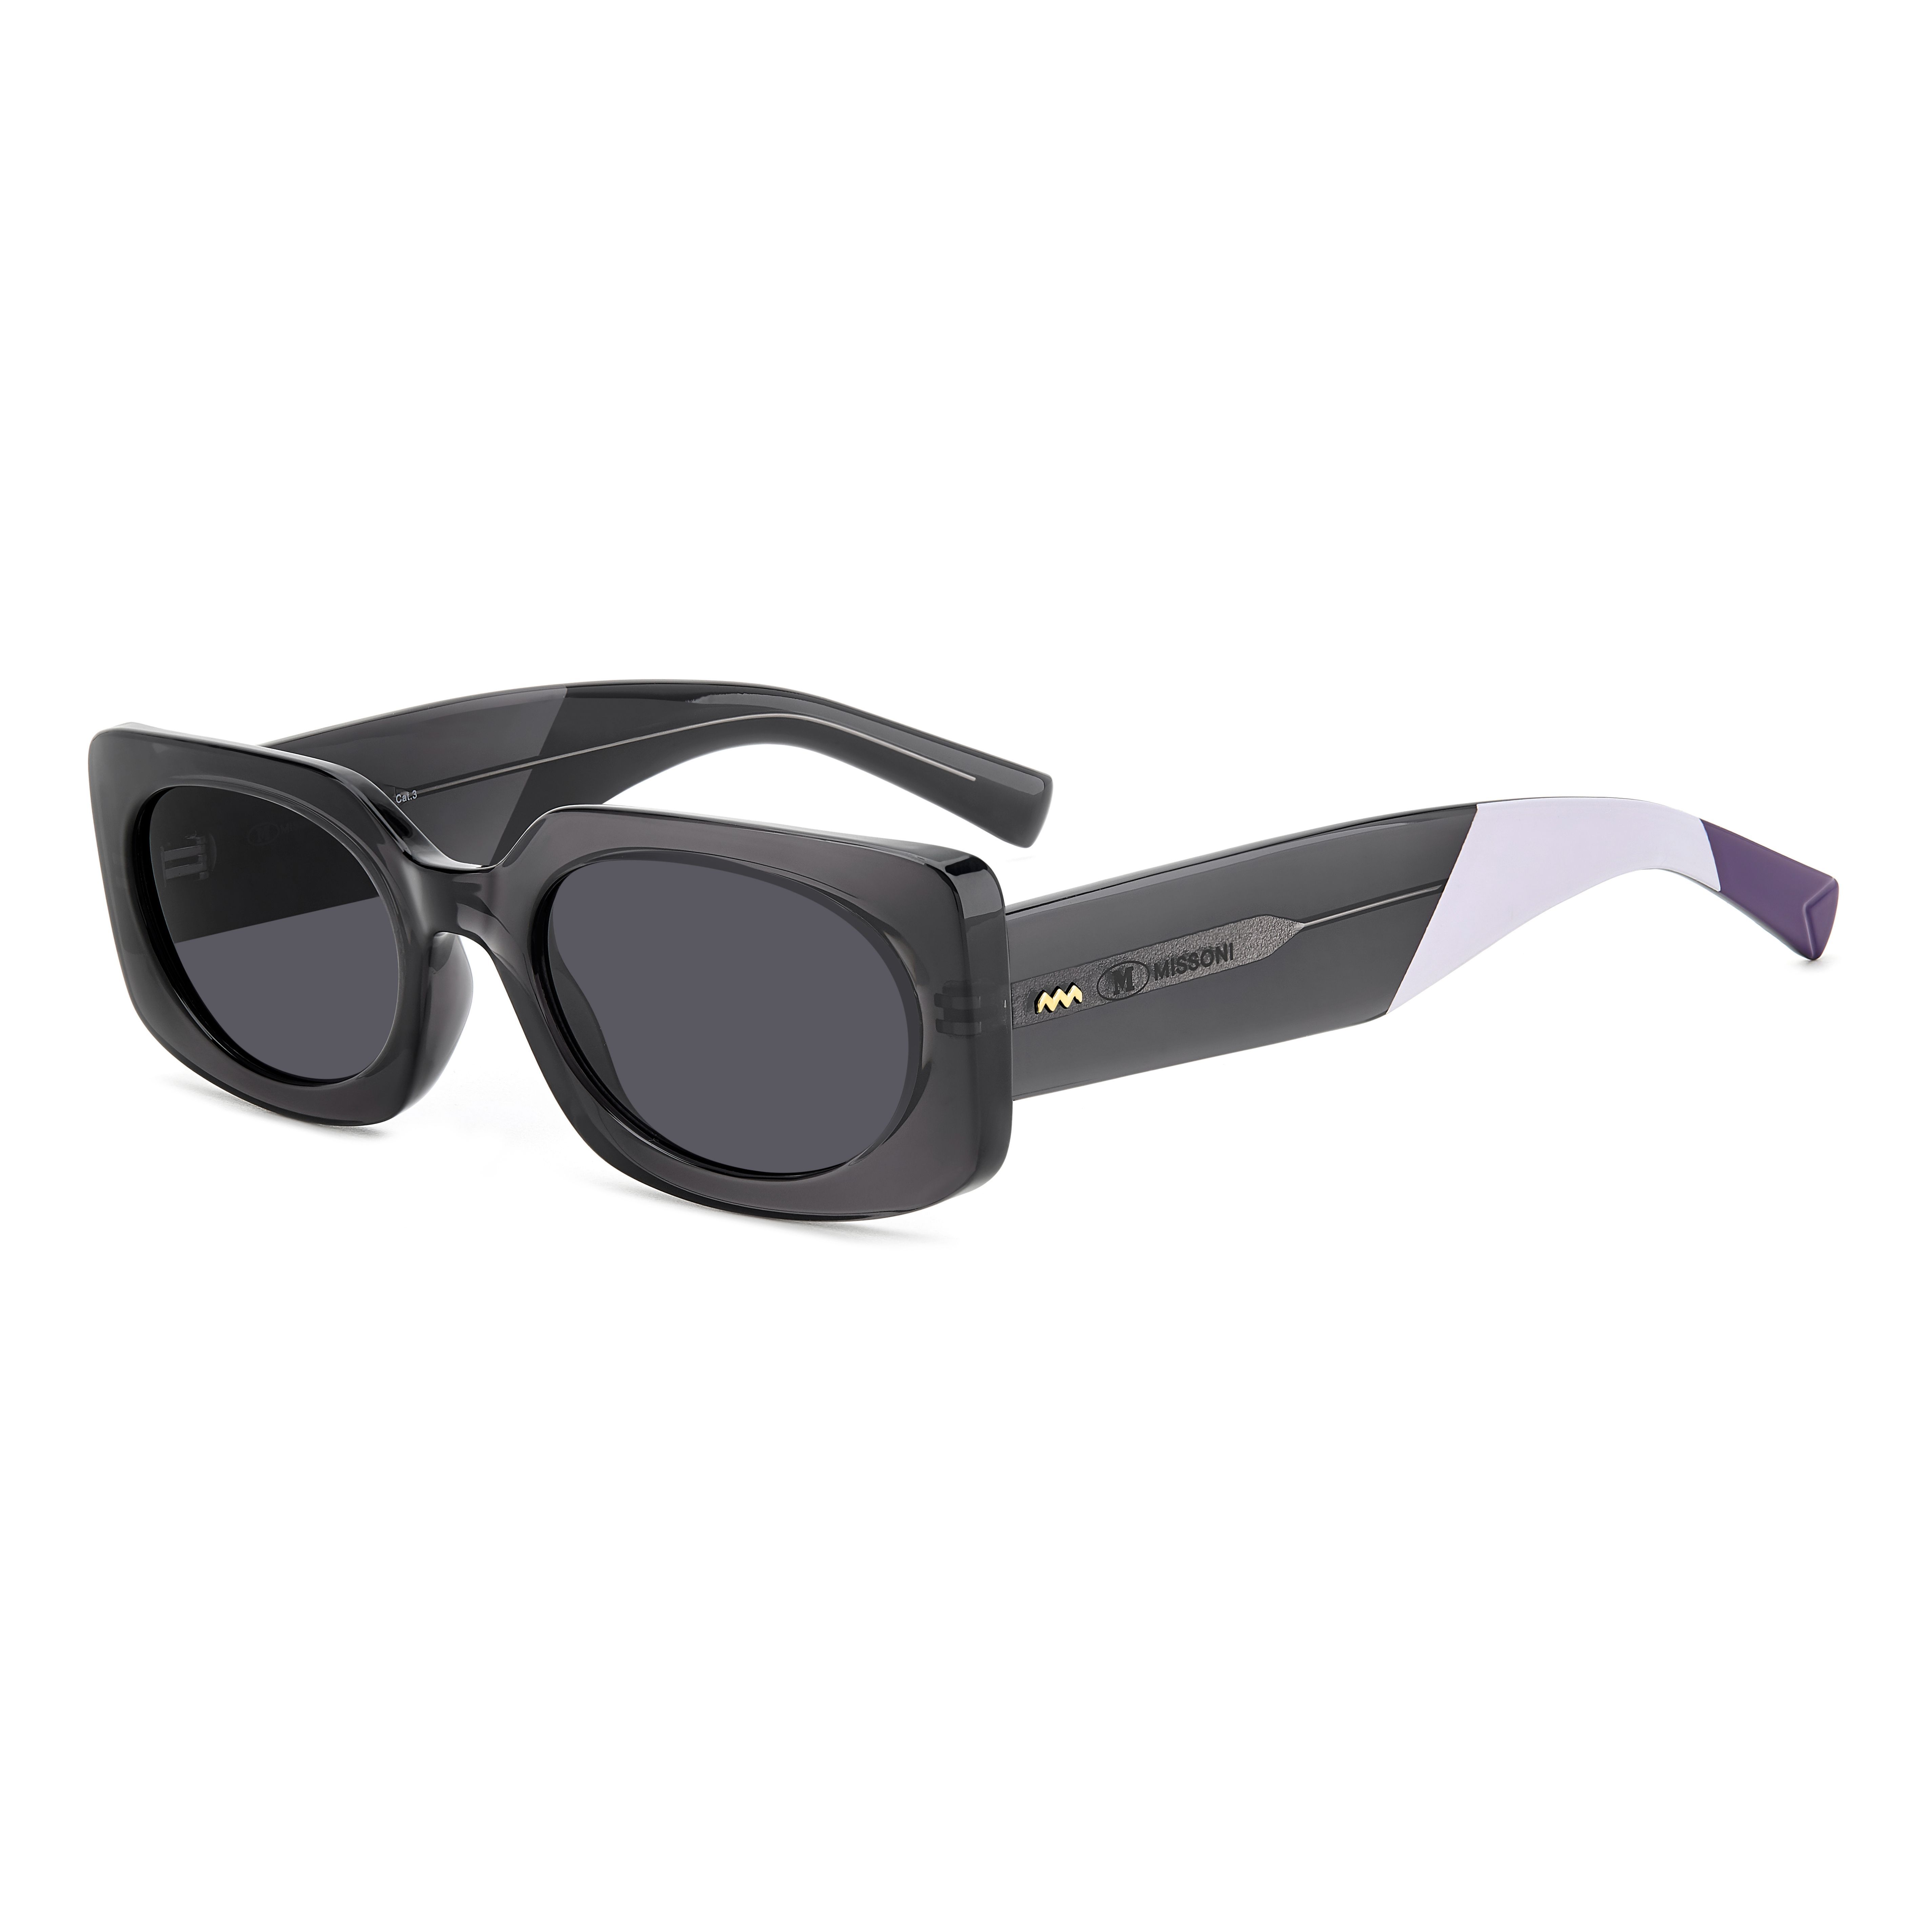 MMI 0169 S Rectangle Sunglasses KB7IR - size 53